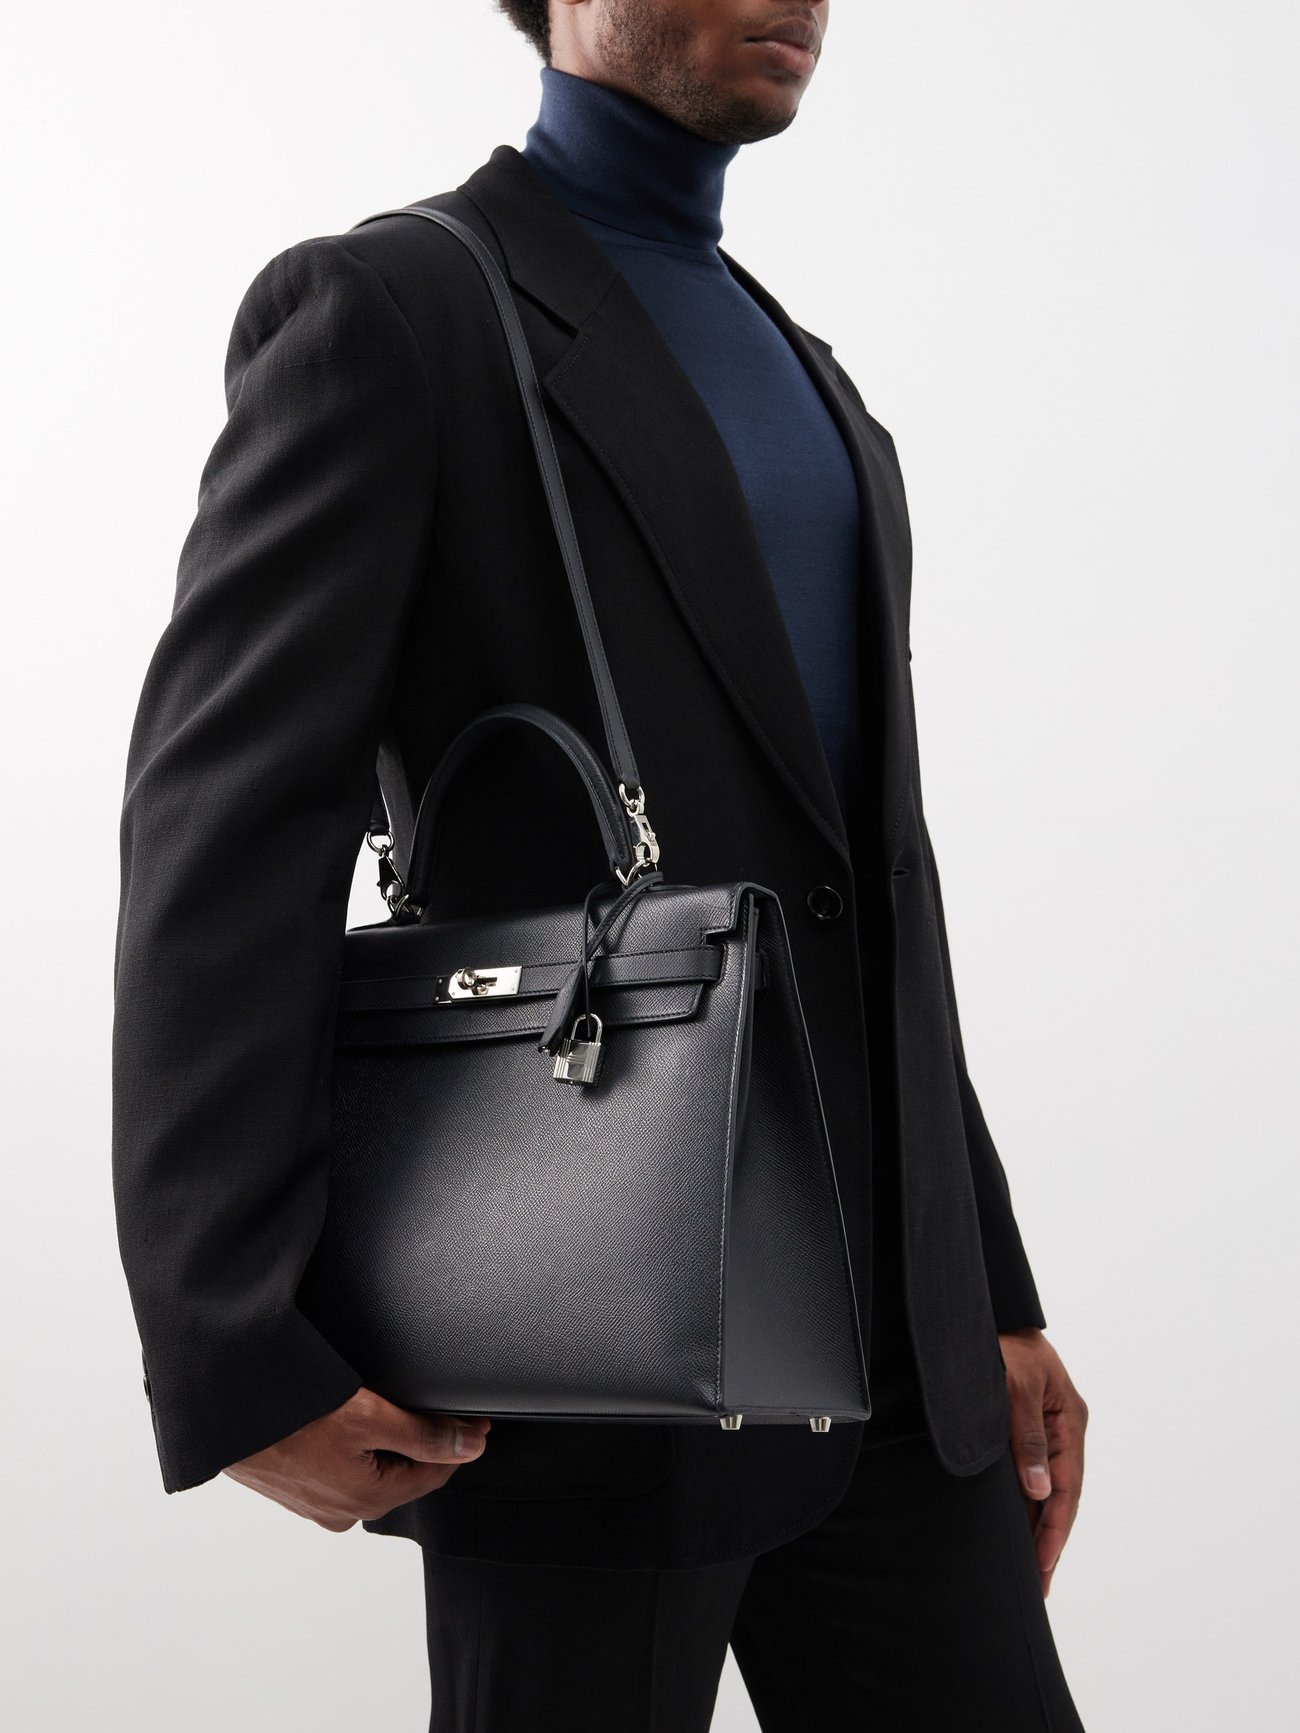 Black Hermès Kelly 35cm handbag, MATCHES x Sellier